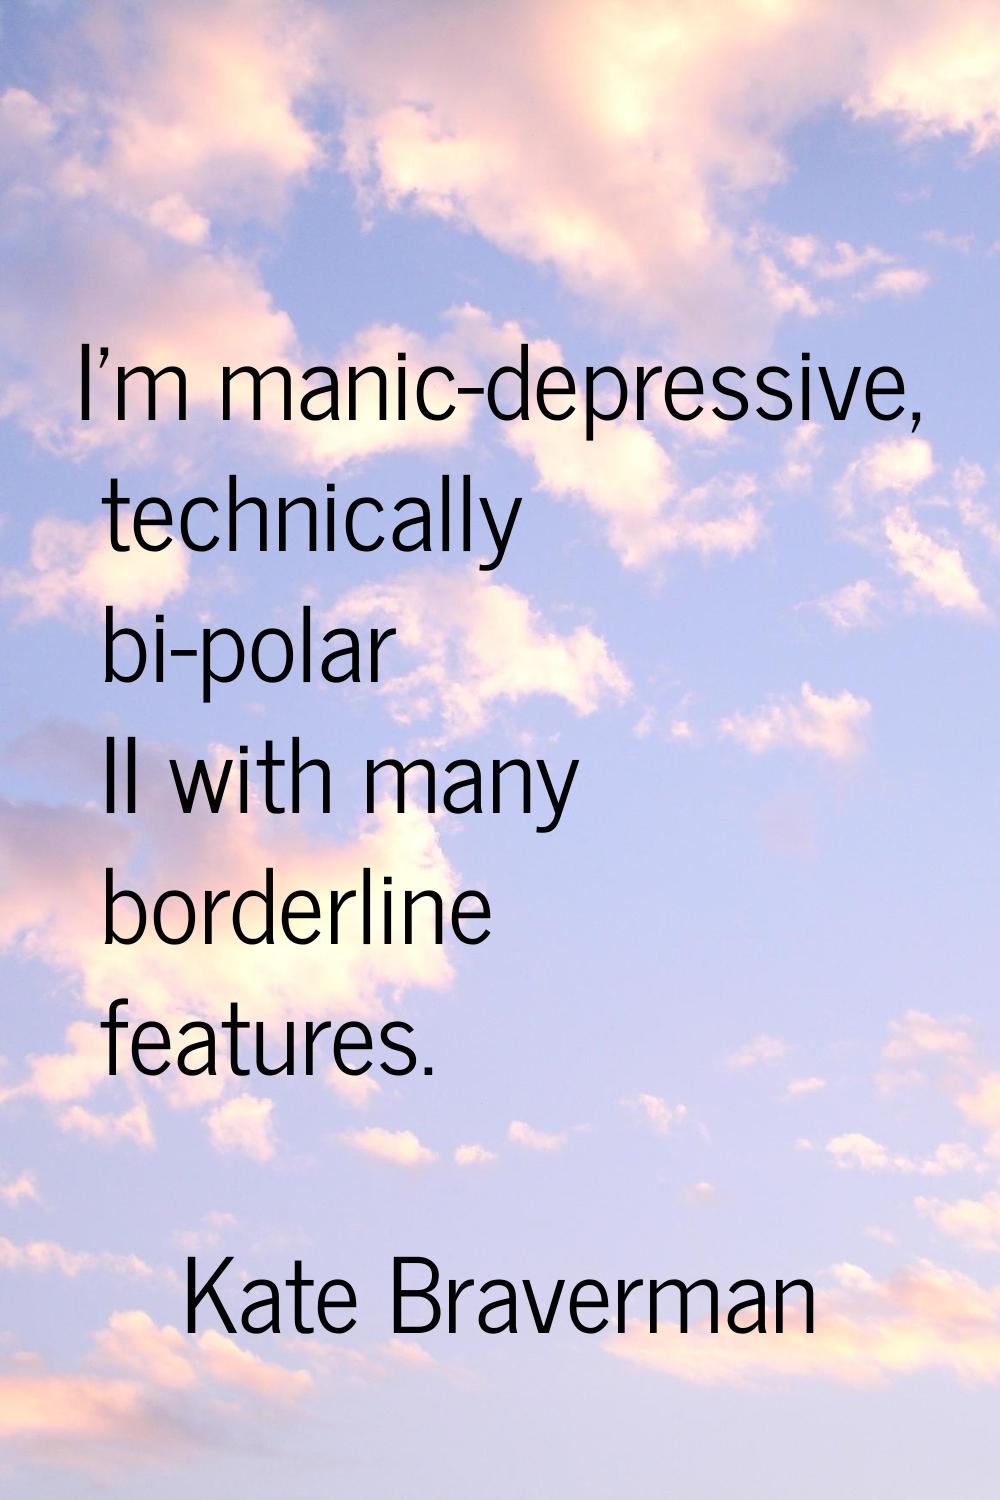 I'm manic-depressive, technically bi-polar II with many borderline features.